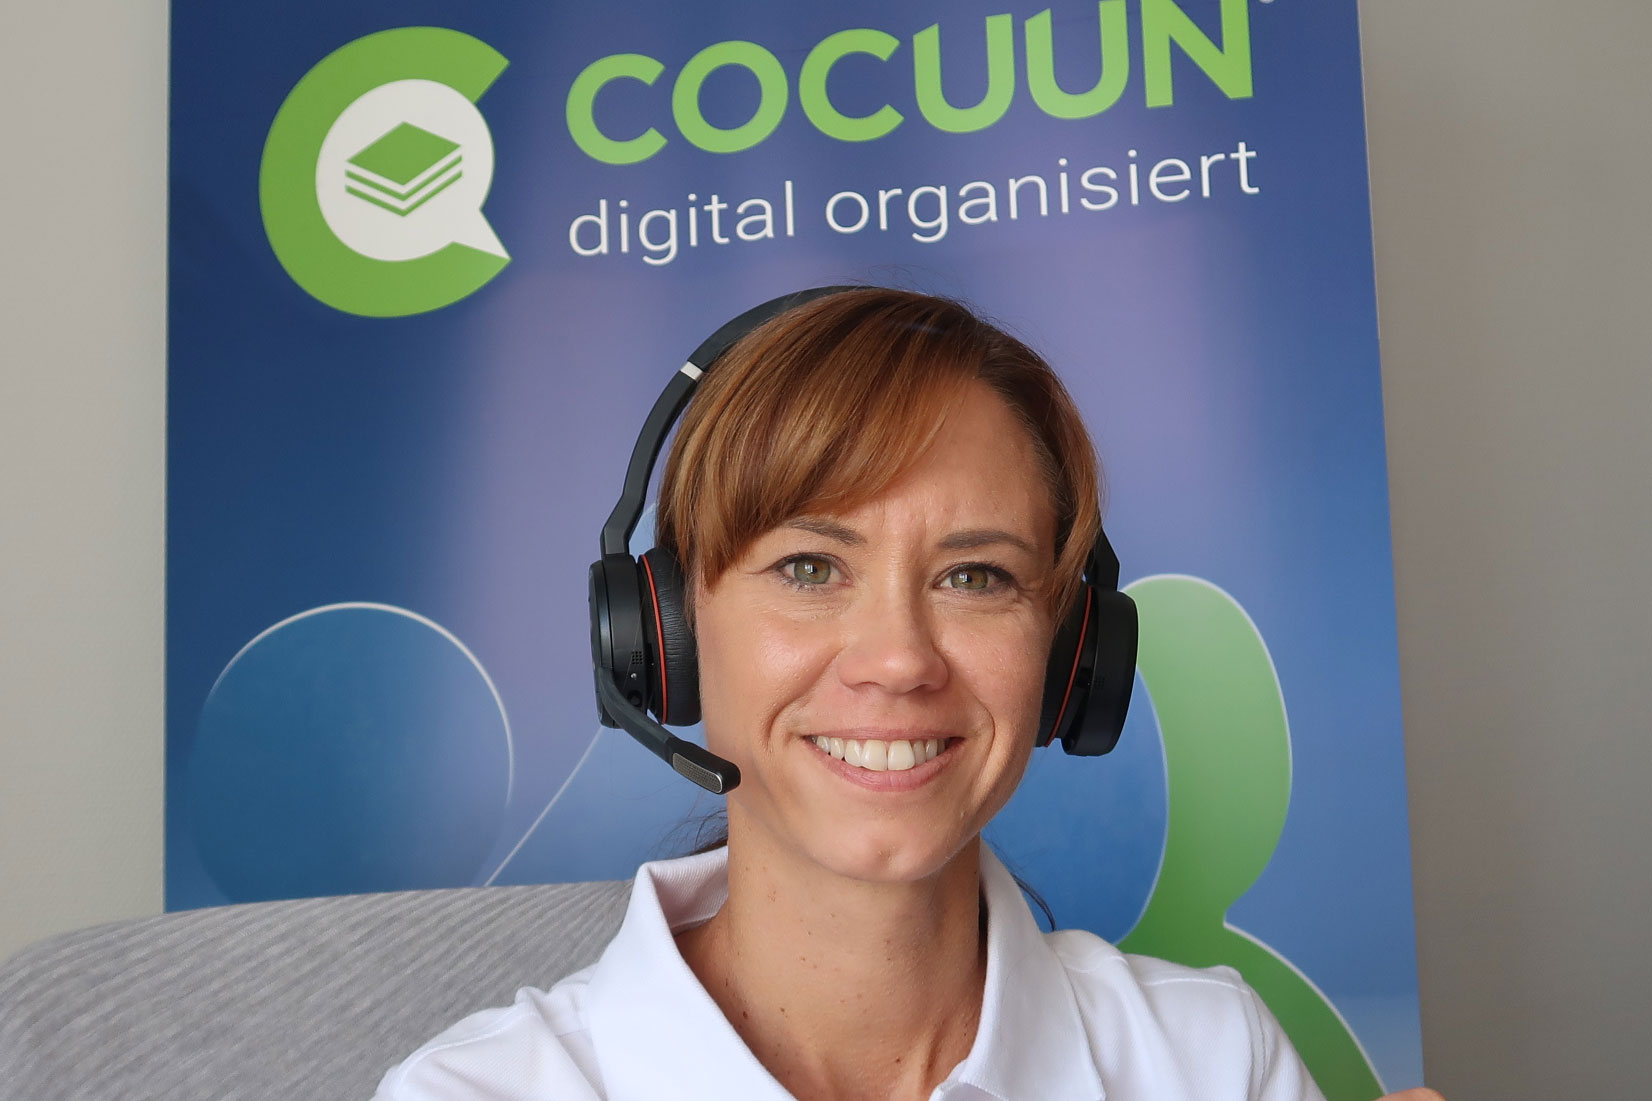 Cocuun Webseminare in der Digitalen Woche ab 20.8.2020